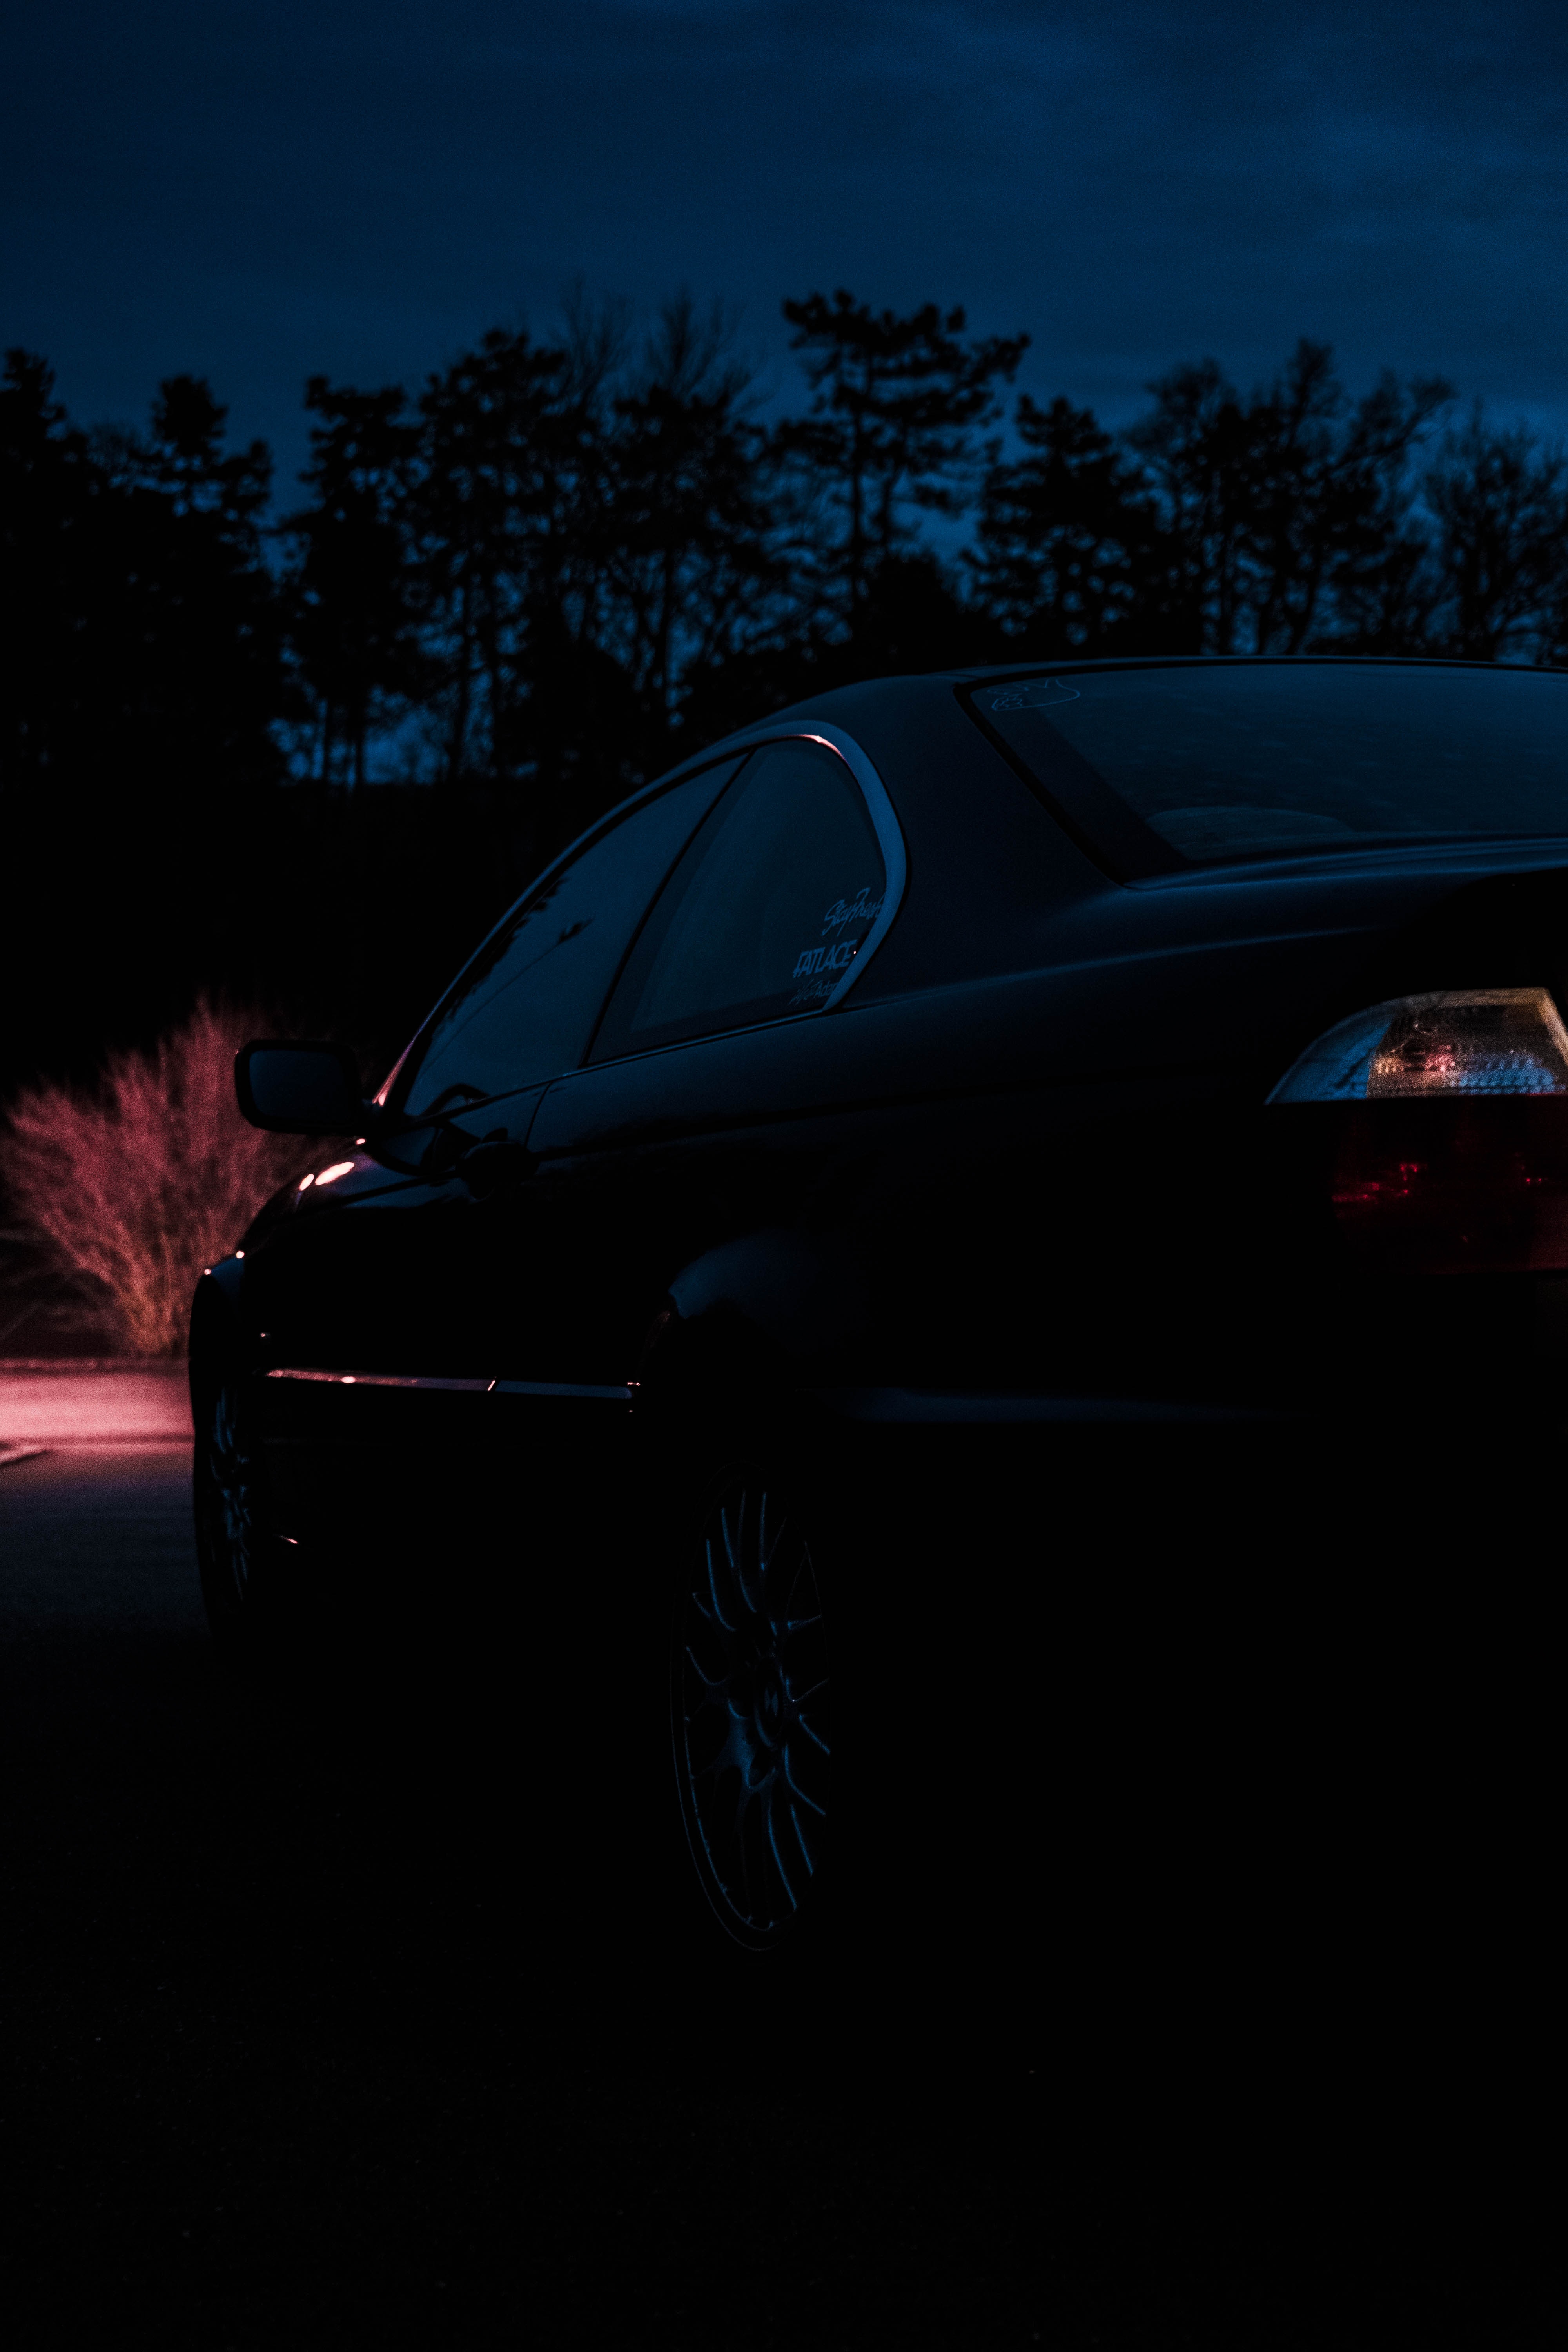 bmw, night, cars, car, darkness, side view